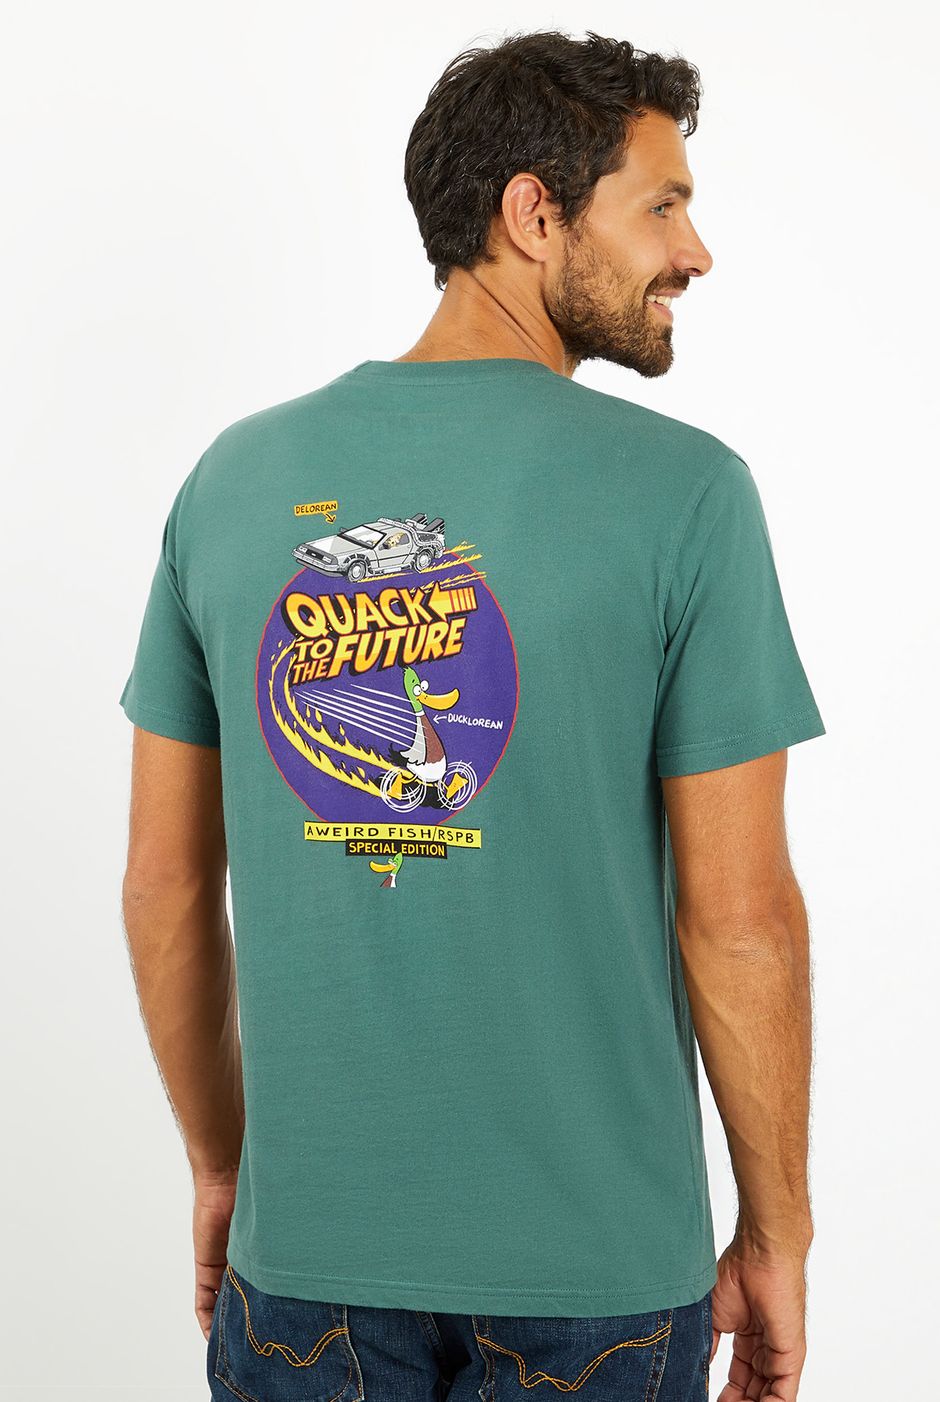 Quack RSPB Artist T-Shirt Dark Green